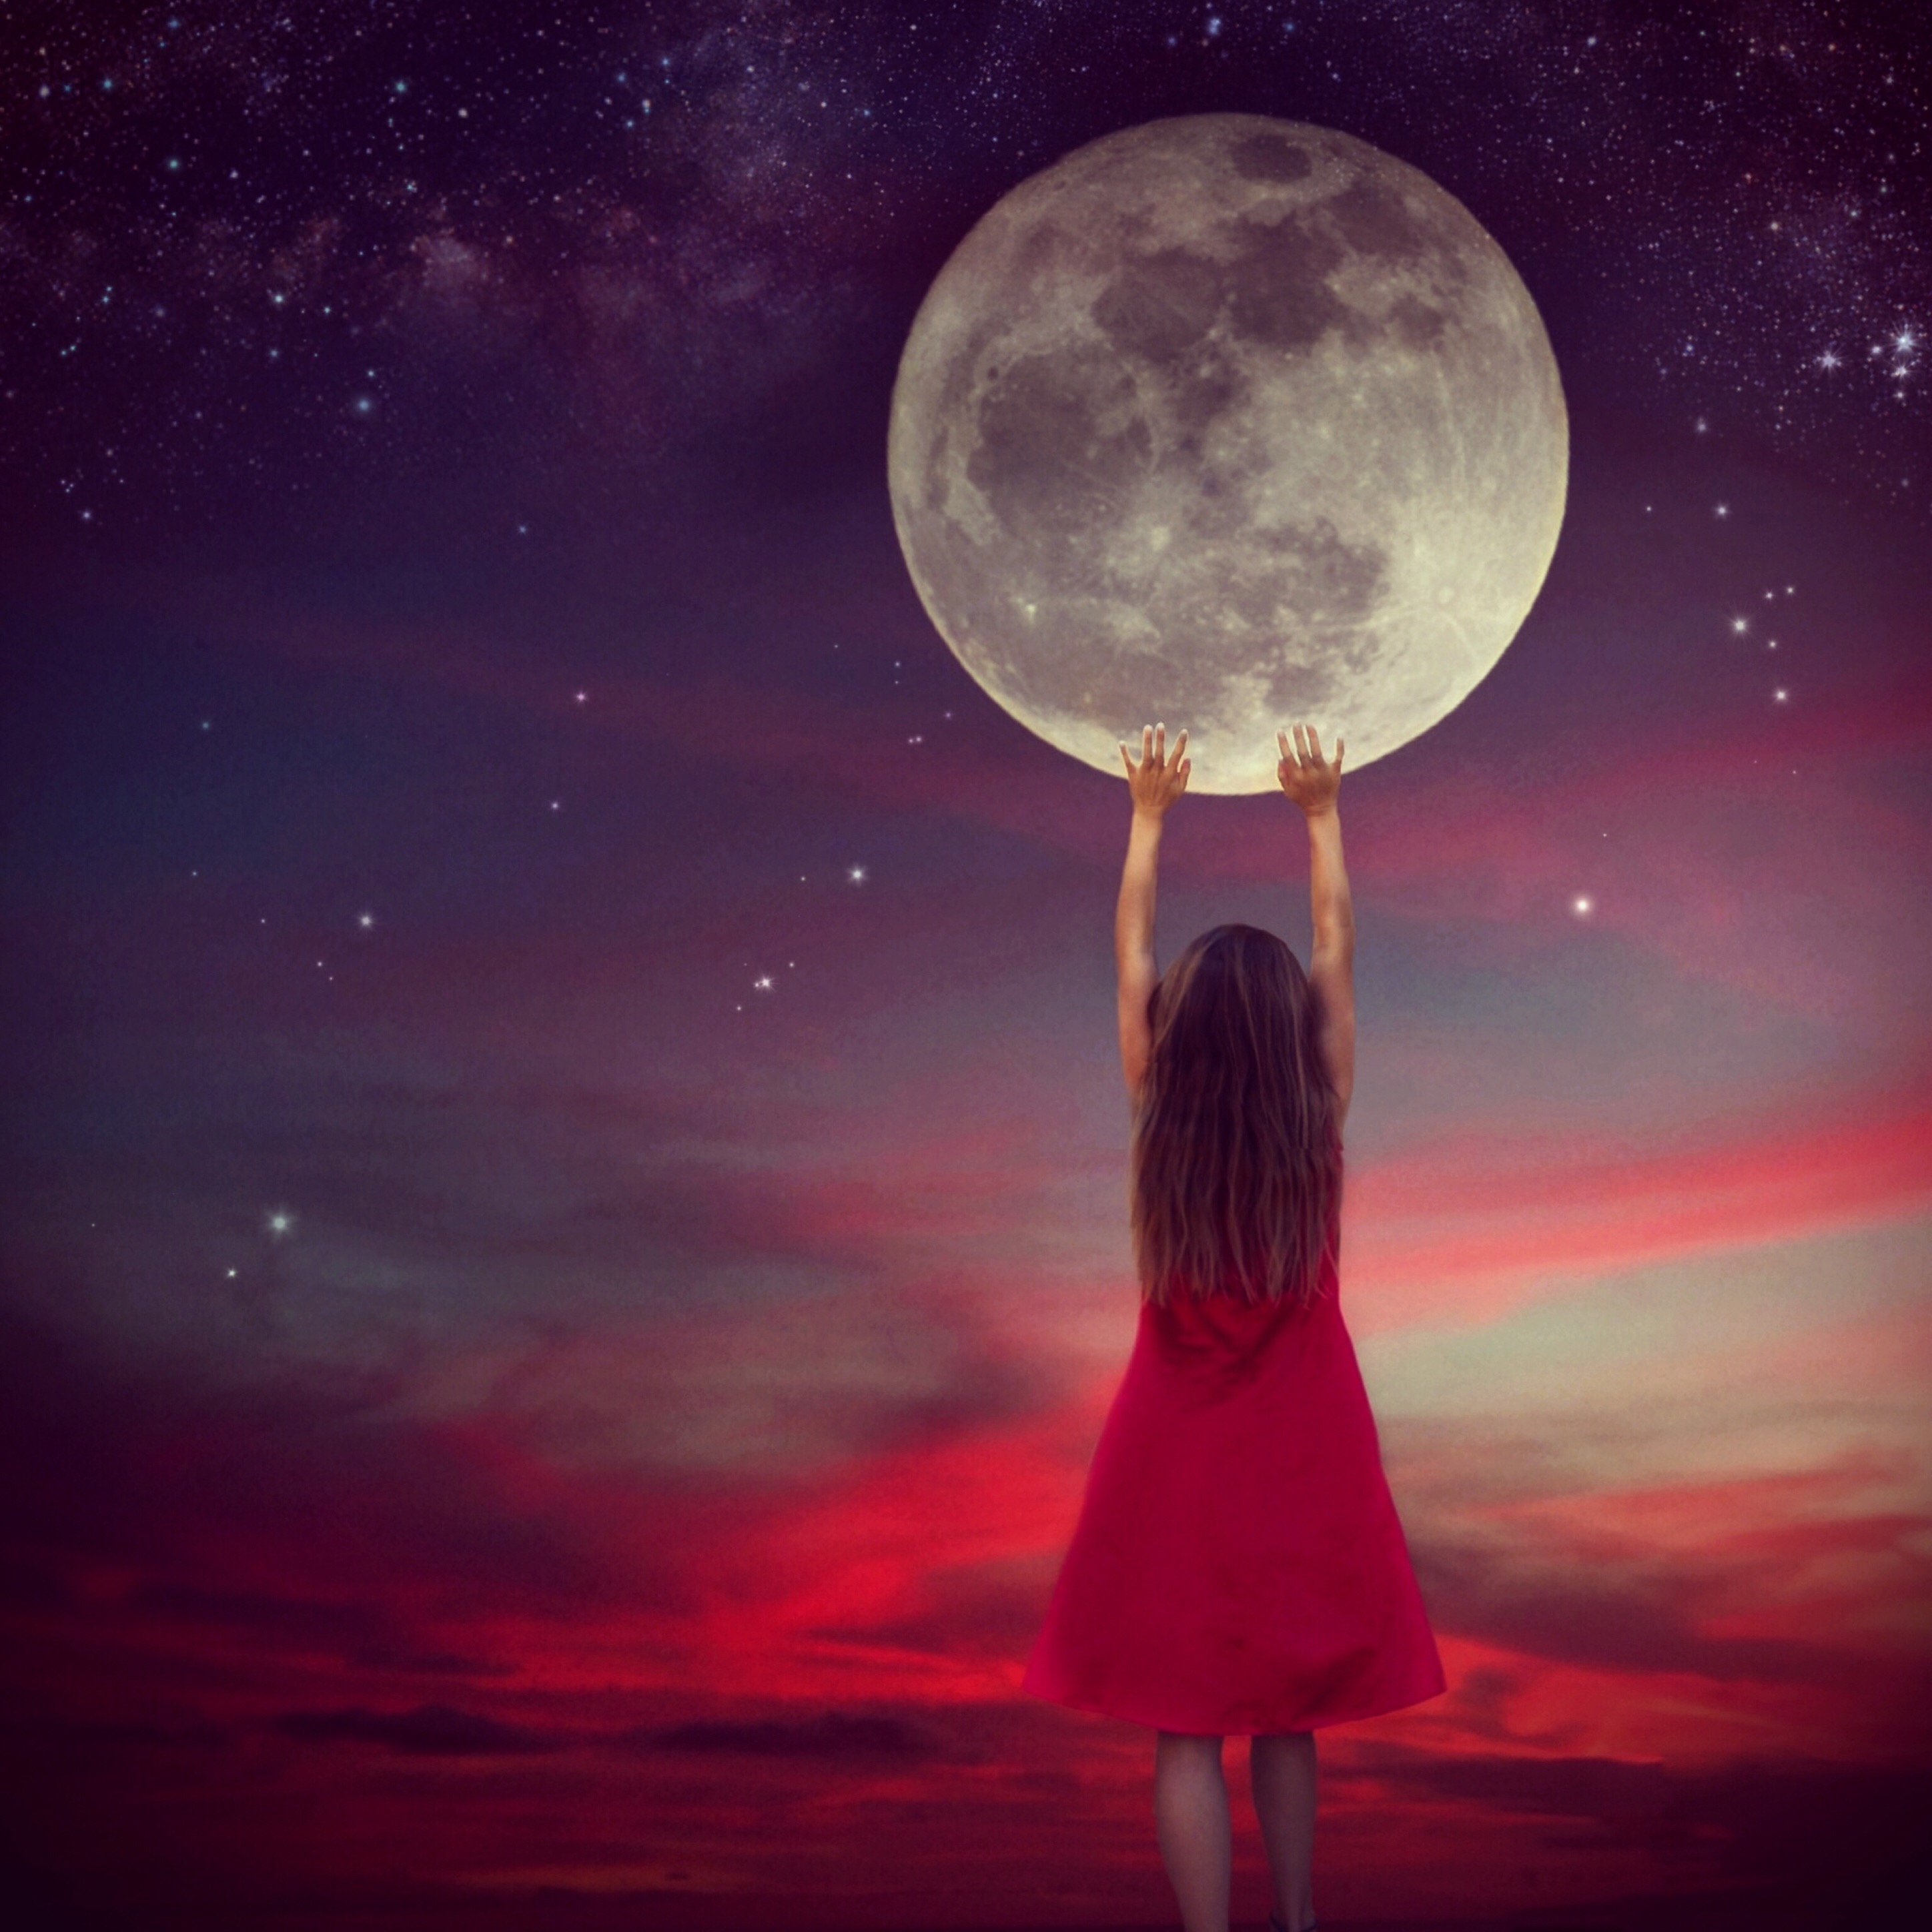 Looking at the moon. Девушка-Луна. Девочка на Луне. Мечтатель. Девочка с луной в руках.